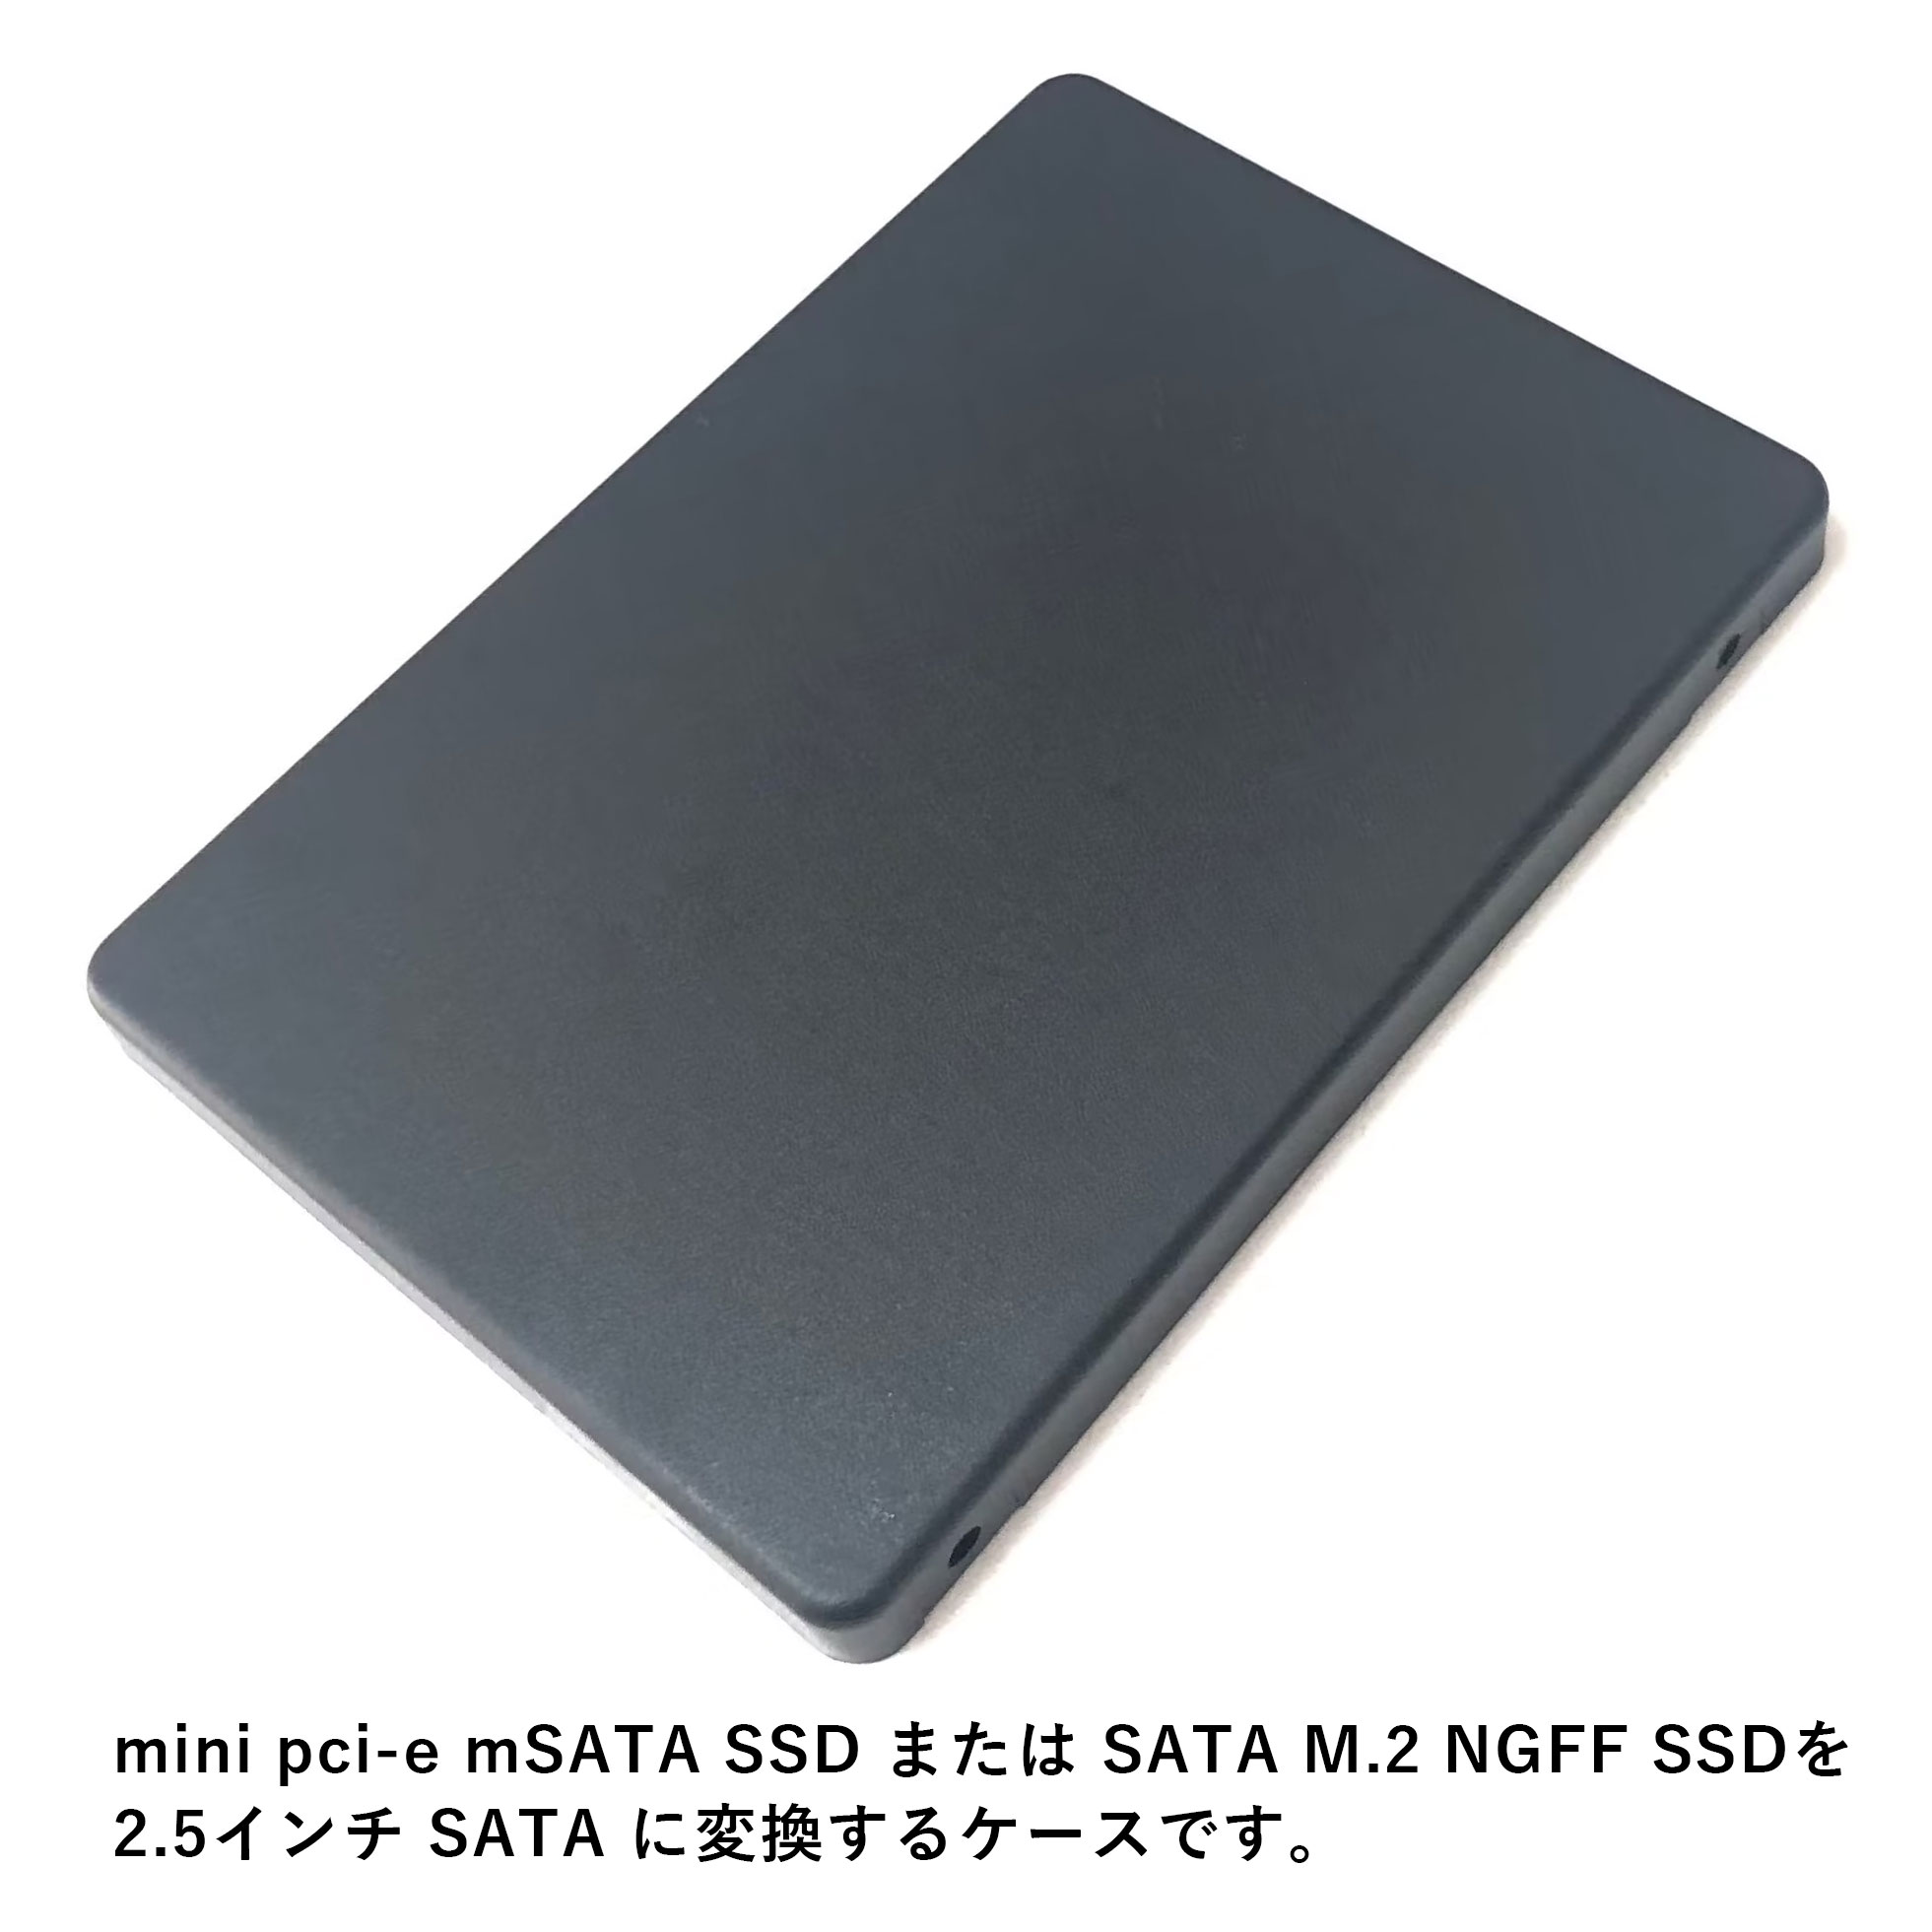 SATA M.2 NGFF SSD &amp; mSATA SSD - 2.5 -inch case attaching SATA 3.0 conversion 2 in 1 adaptor 100×70mm